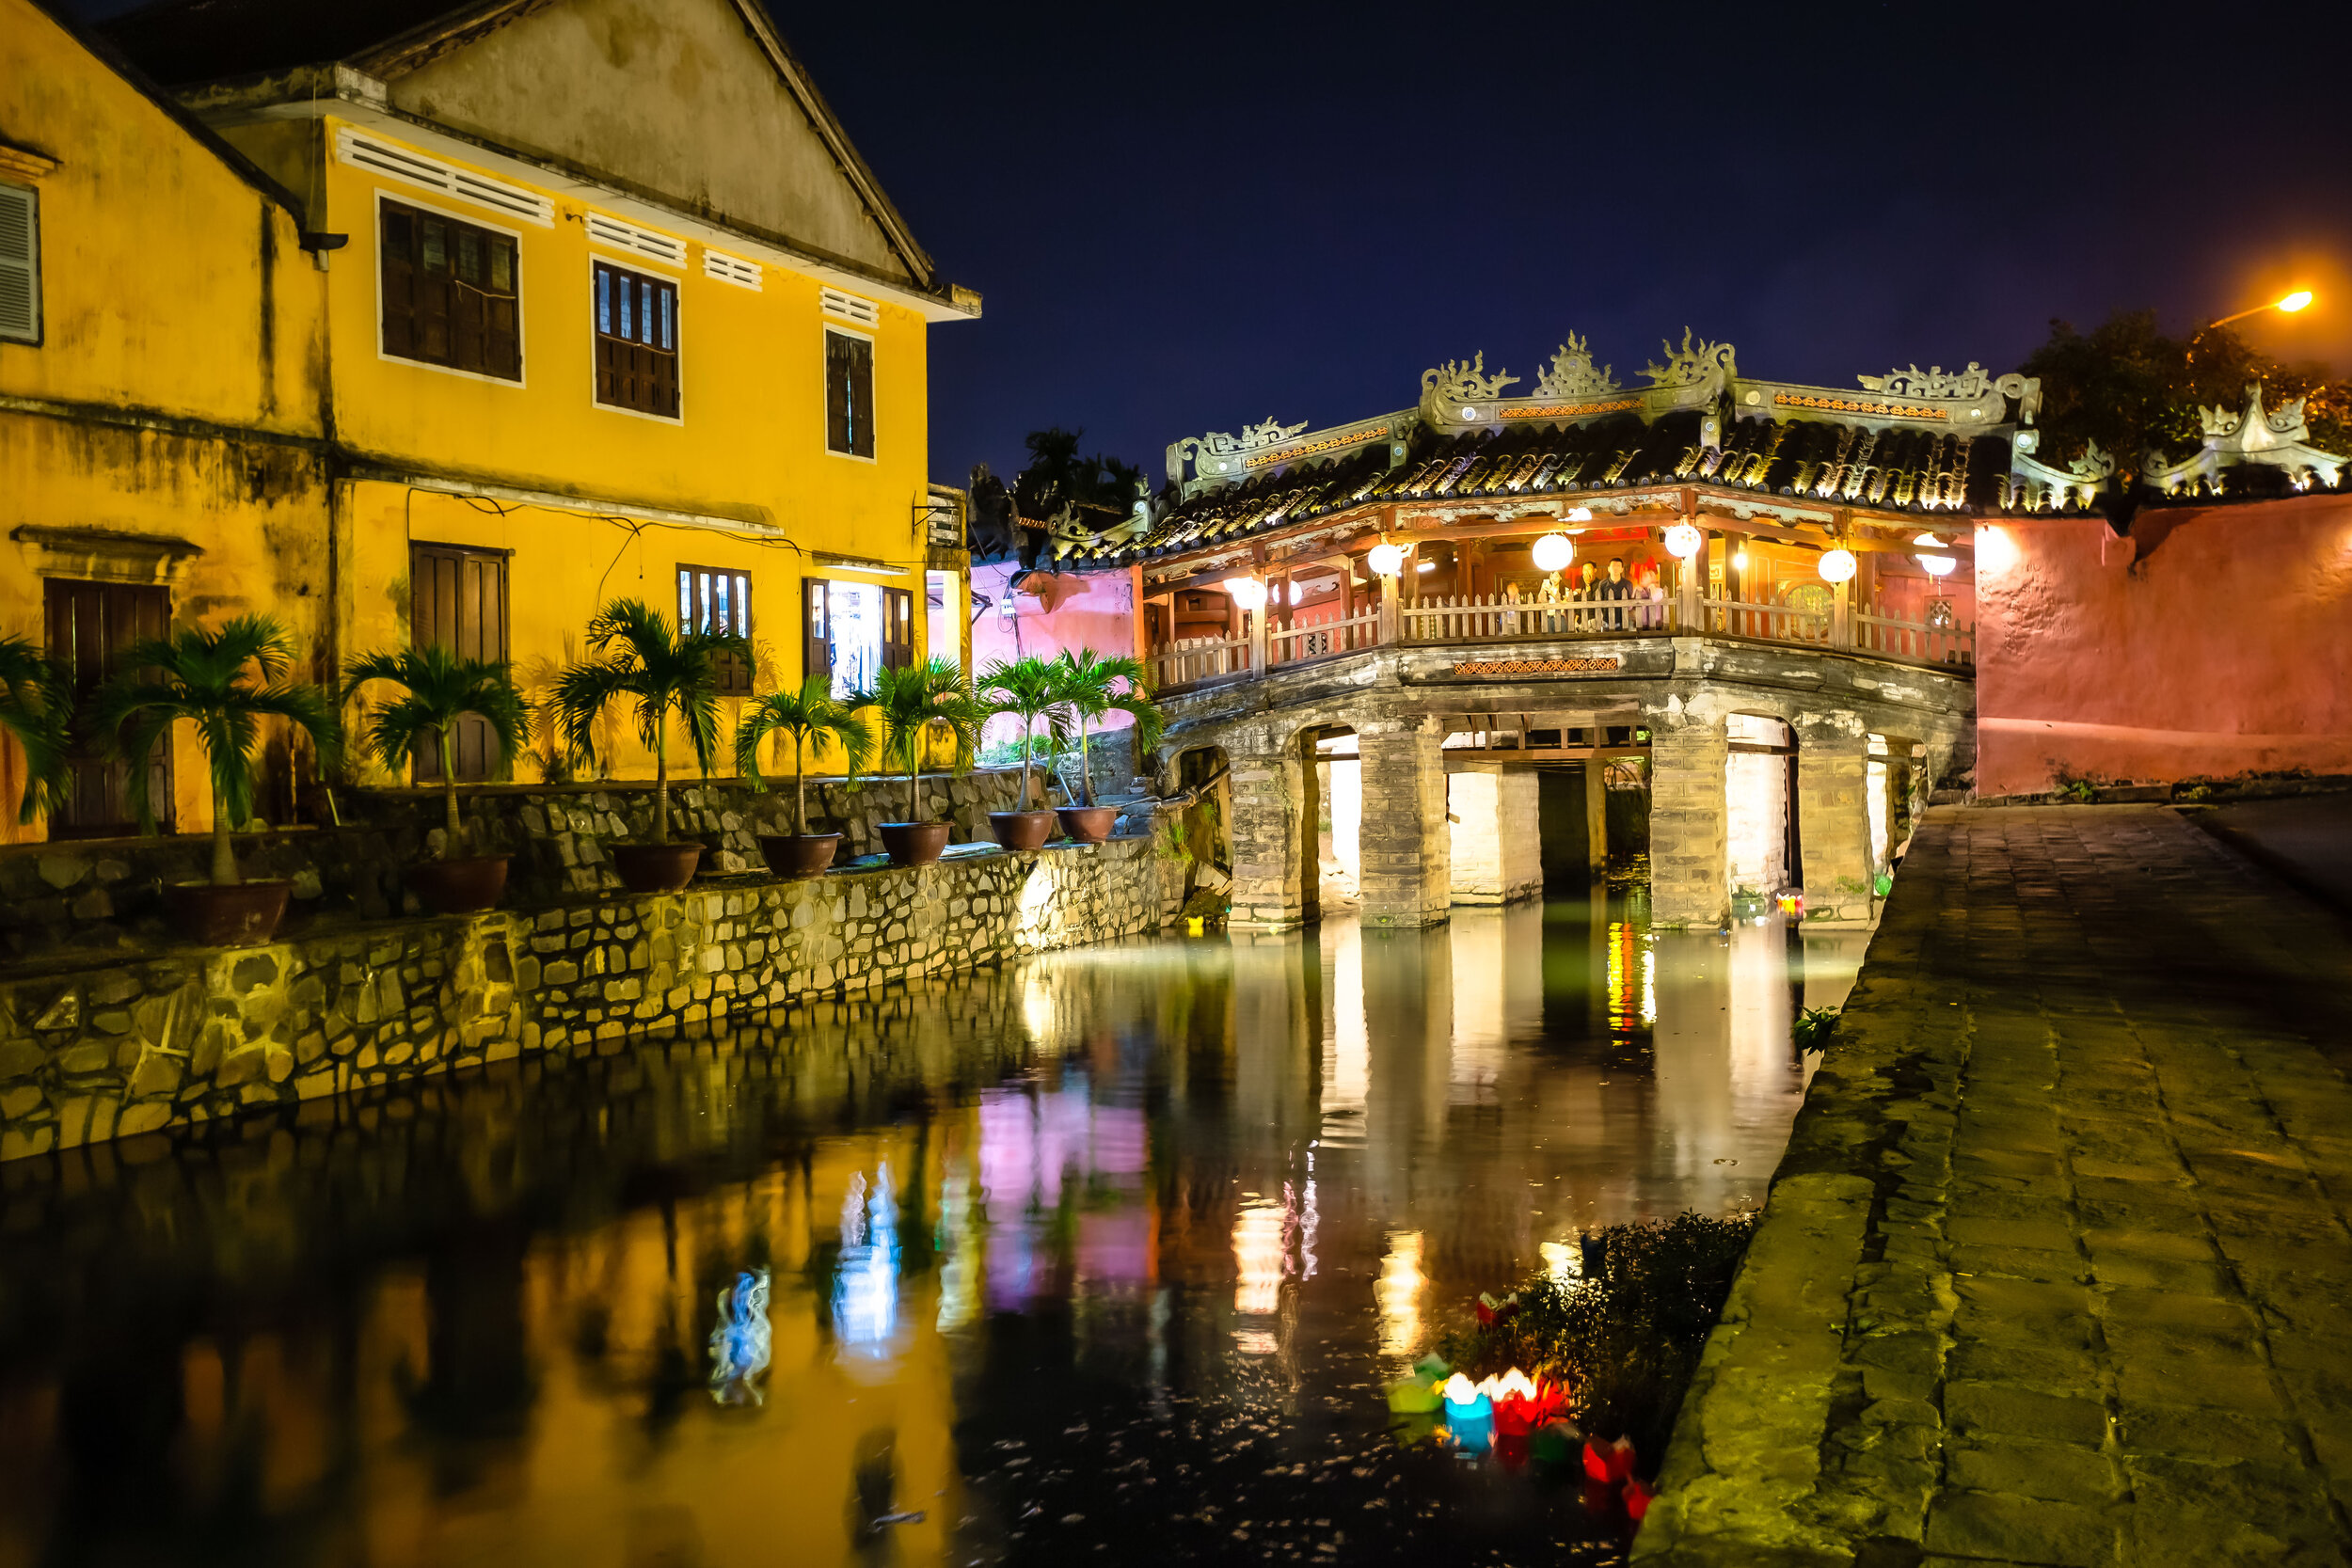 Japanese Bridge in Hoi An Old Town, Vietnam